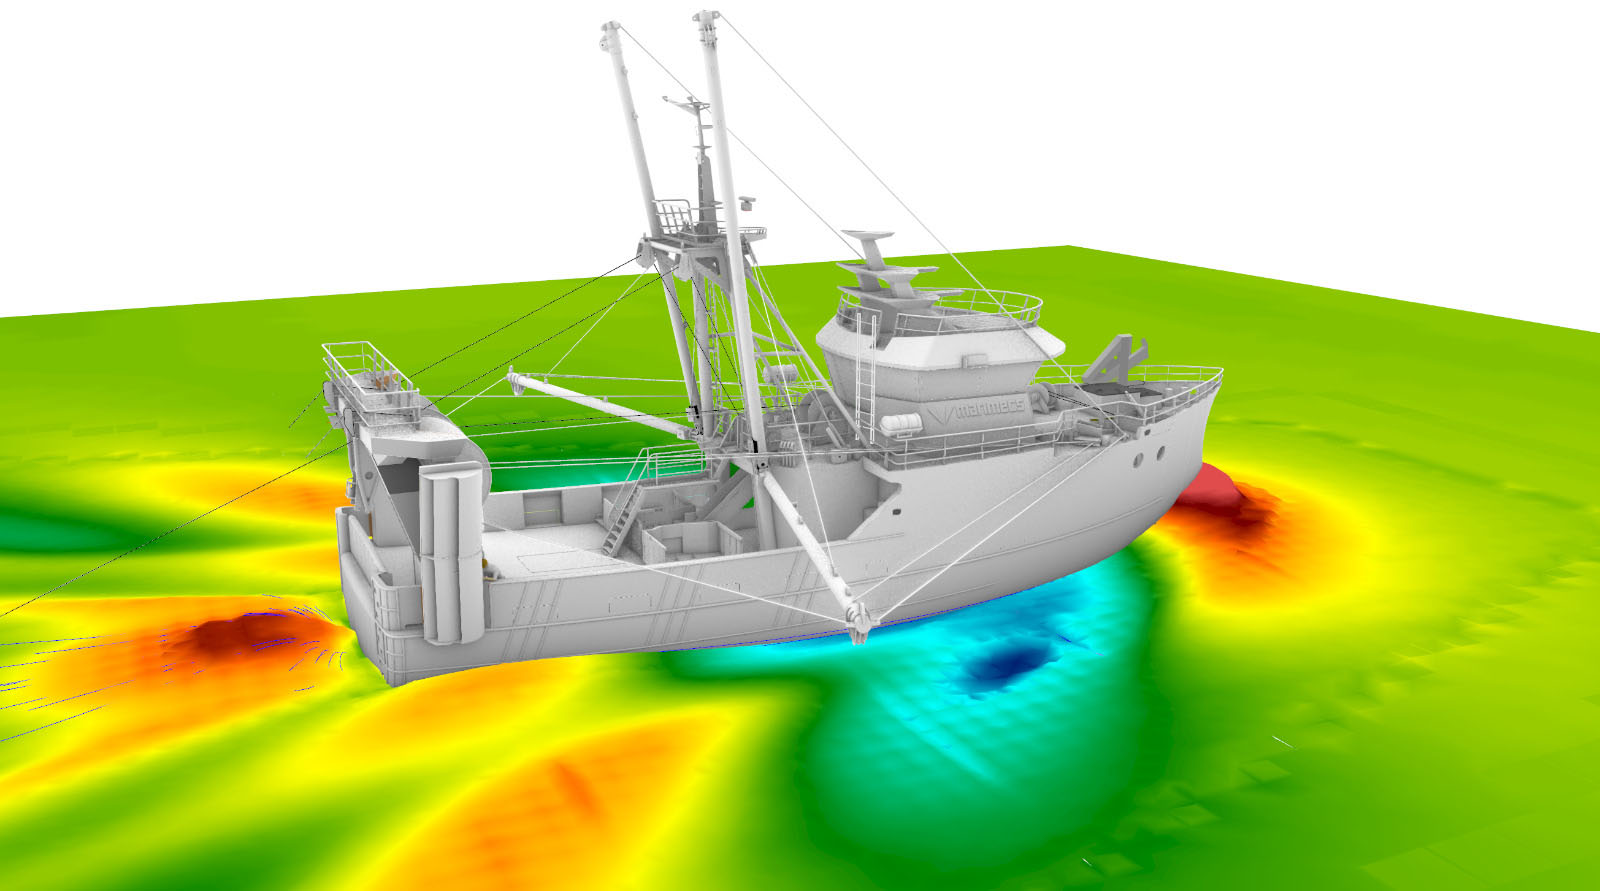 Marimecs ship design shallowdraft coastal research vessel NIOZ